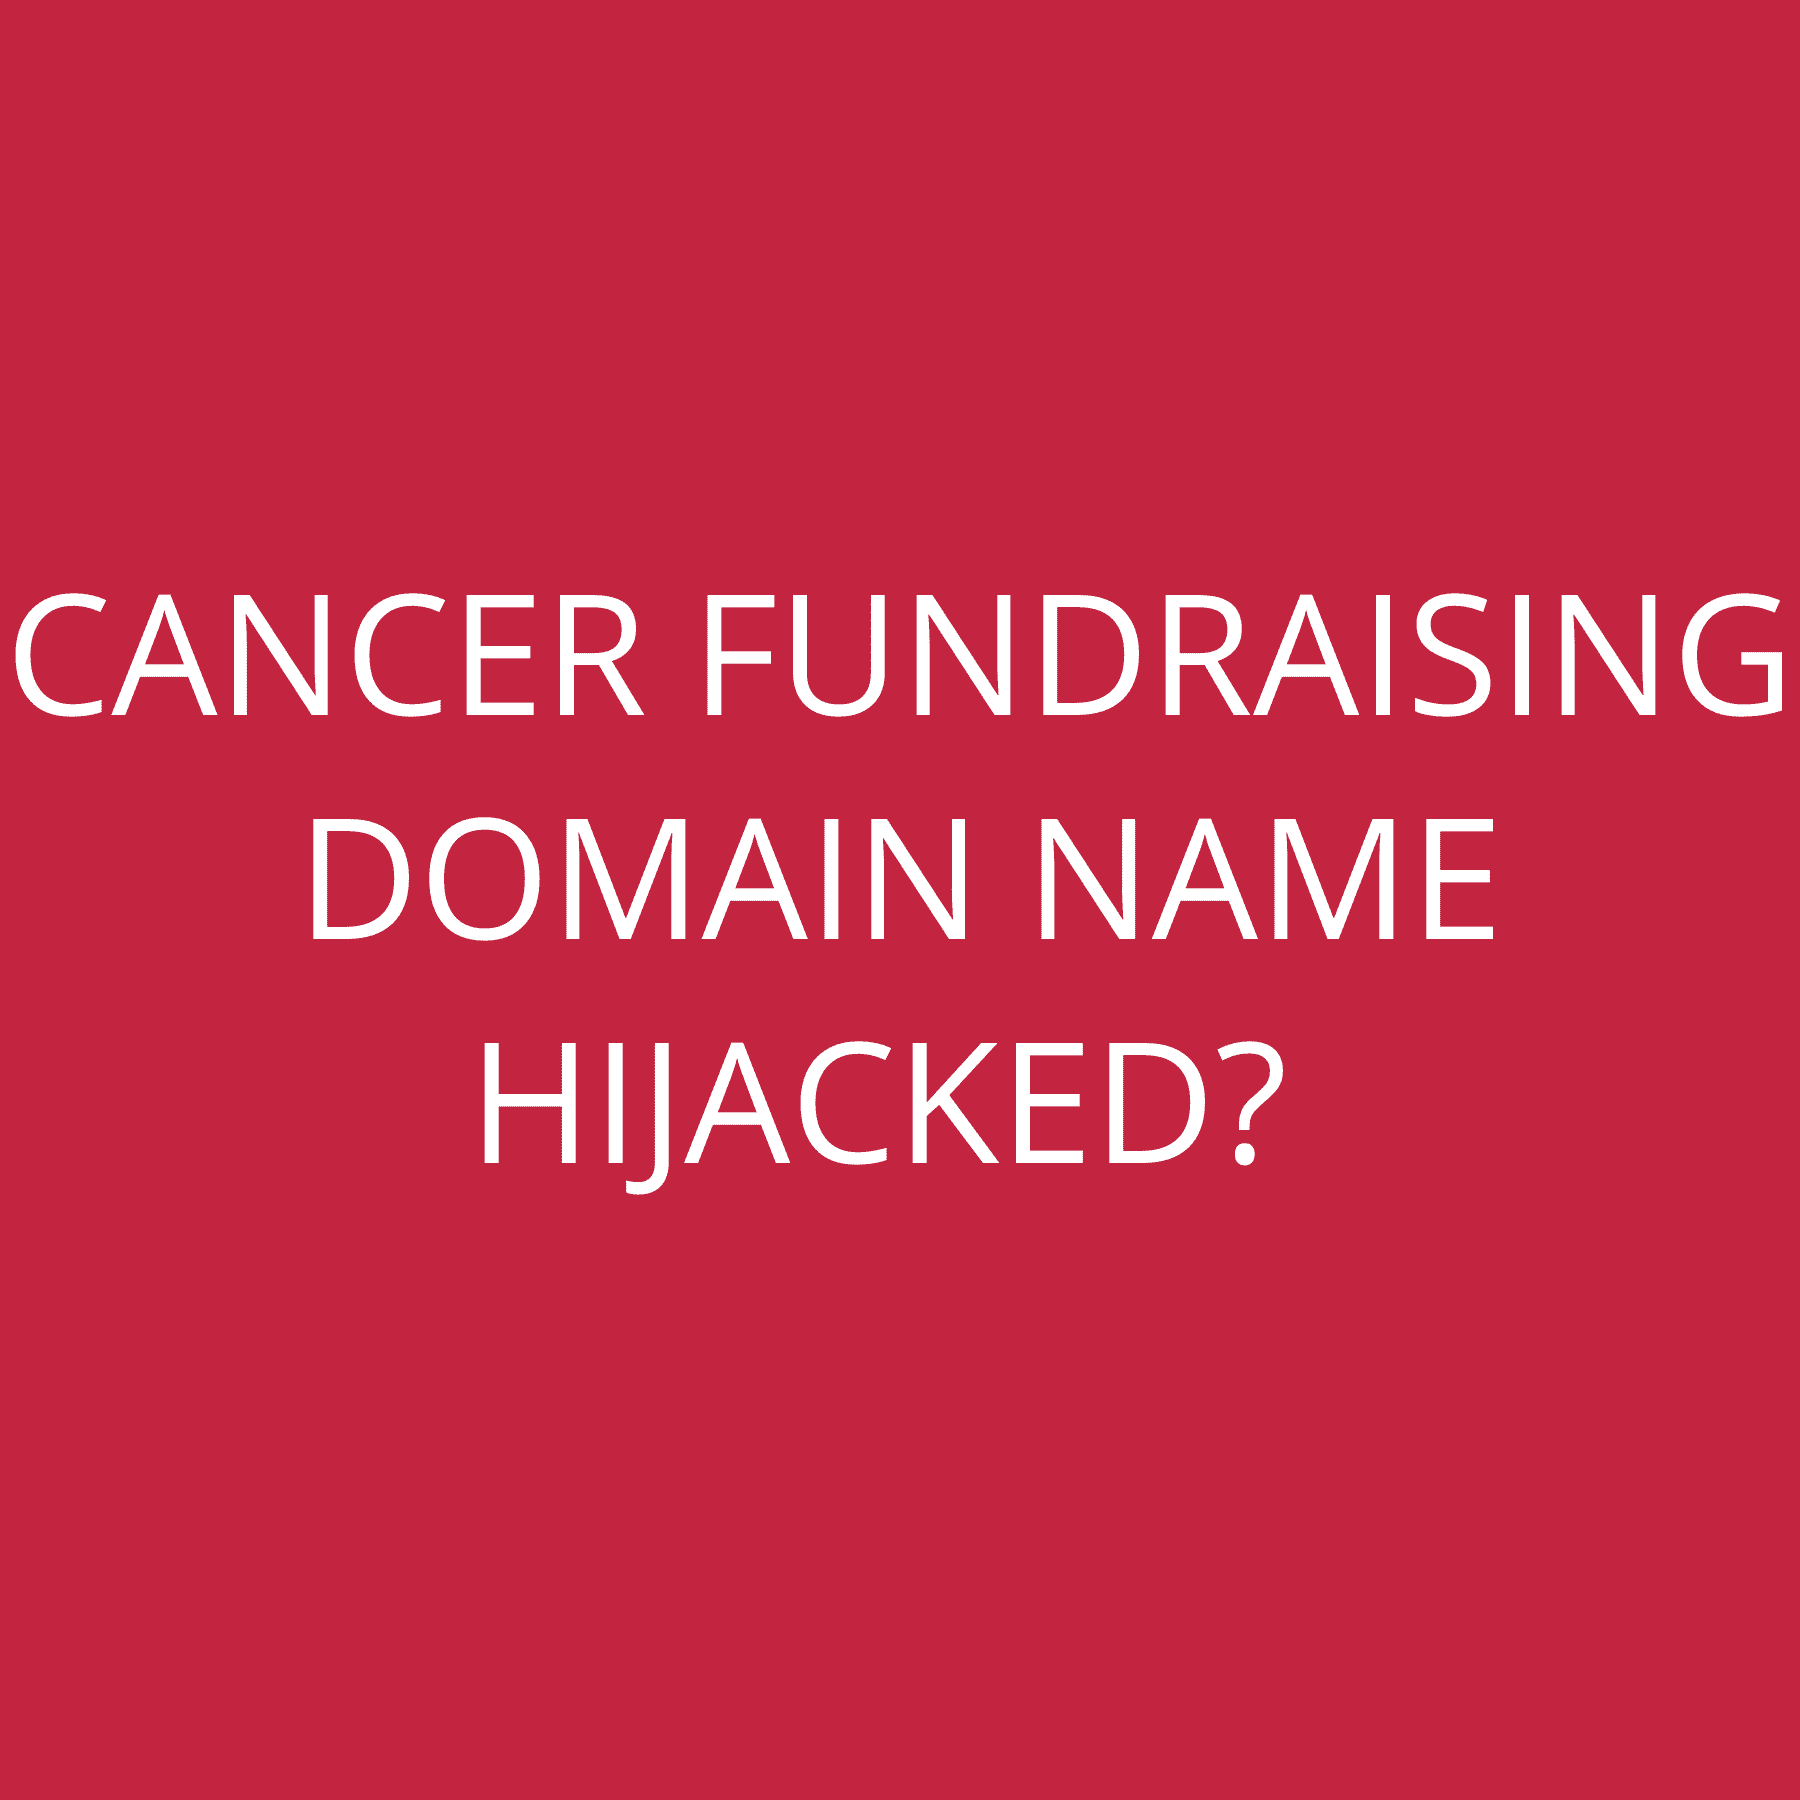 Cancer fundraising domain name hijacked?